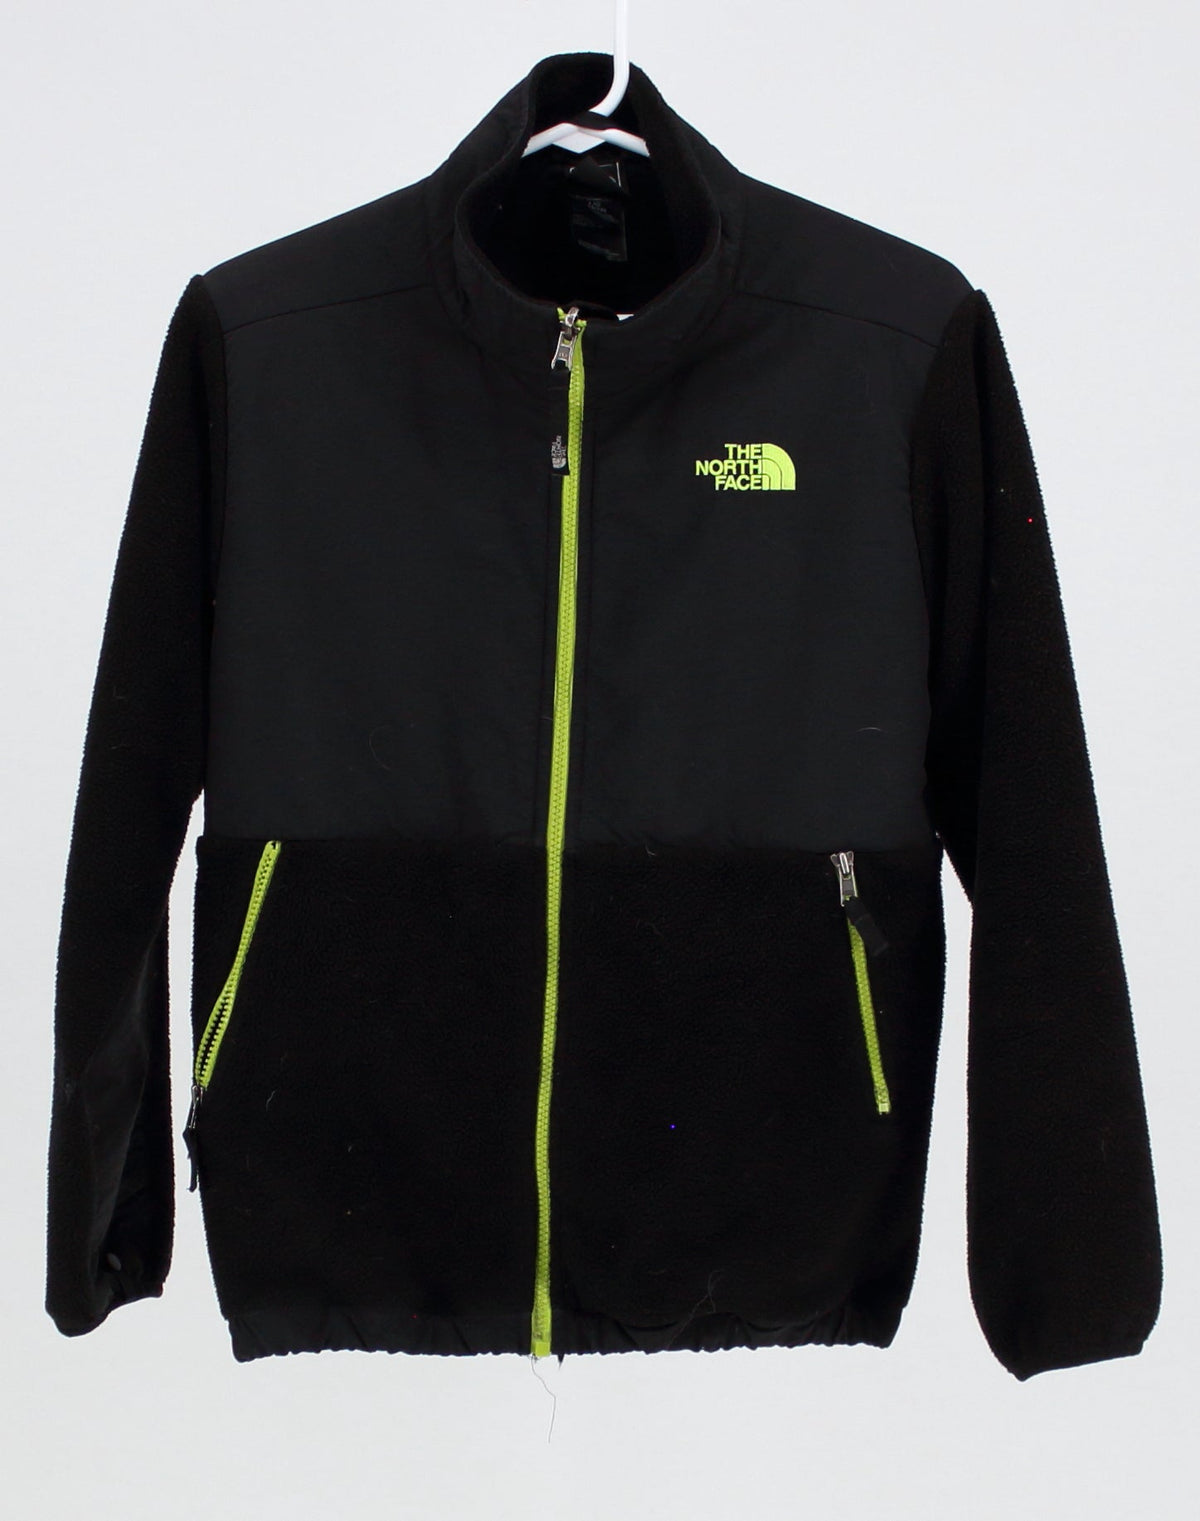 The North Face Black Fleece Athletic Jacket